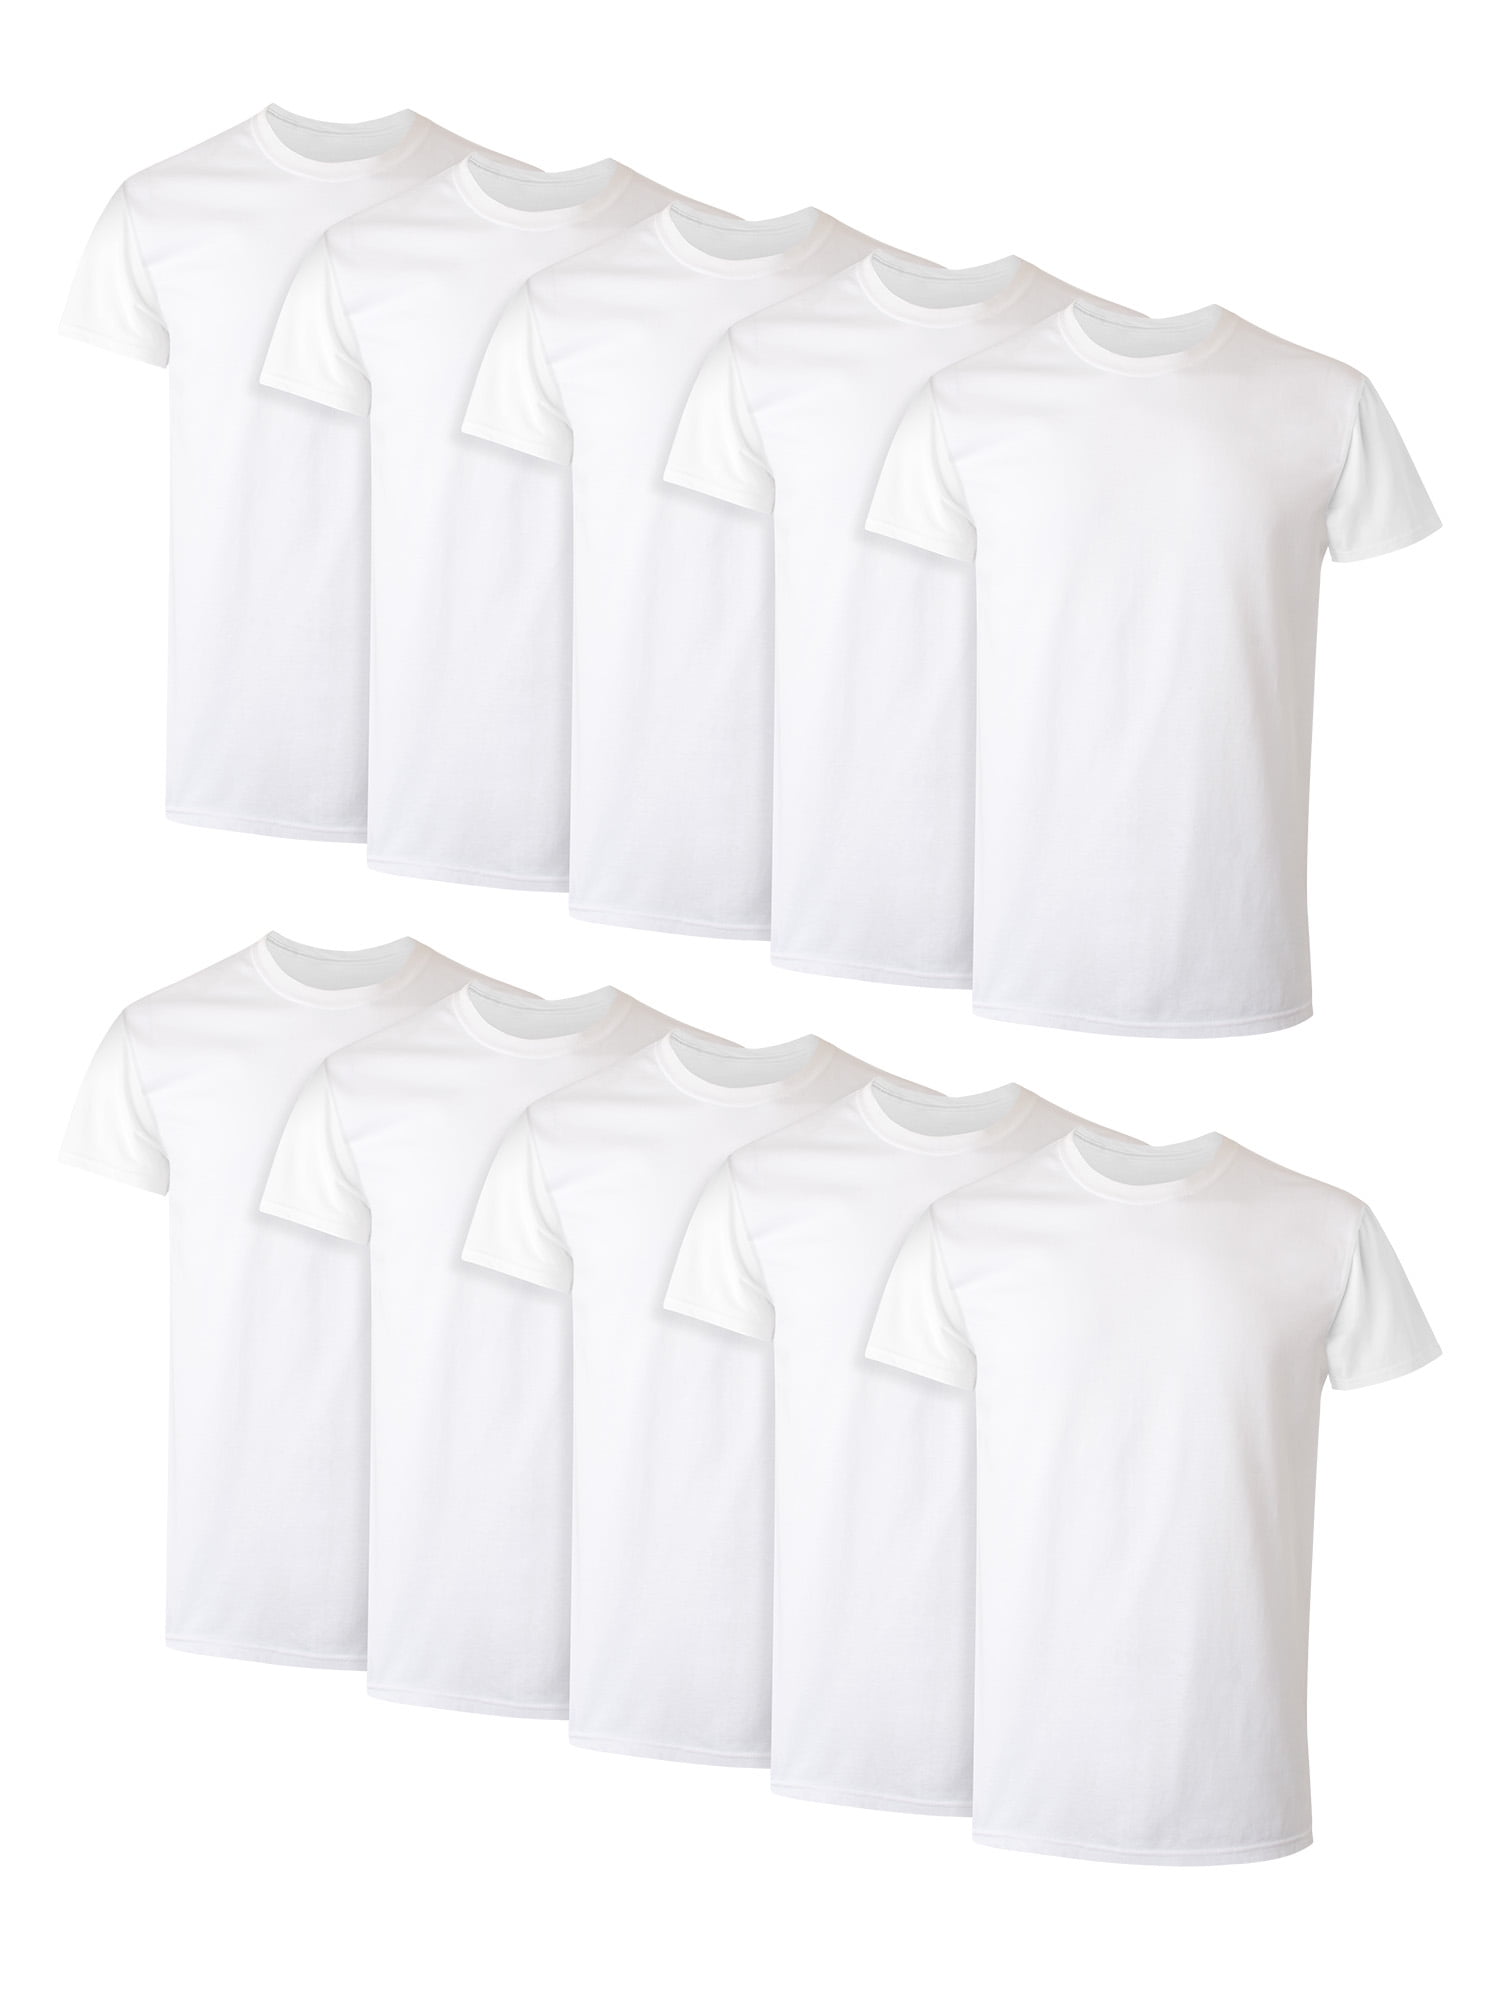 Hanes Value Pack White Crew T-Shirt Undershirts, 10 Pack - Walmart.com